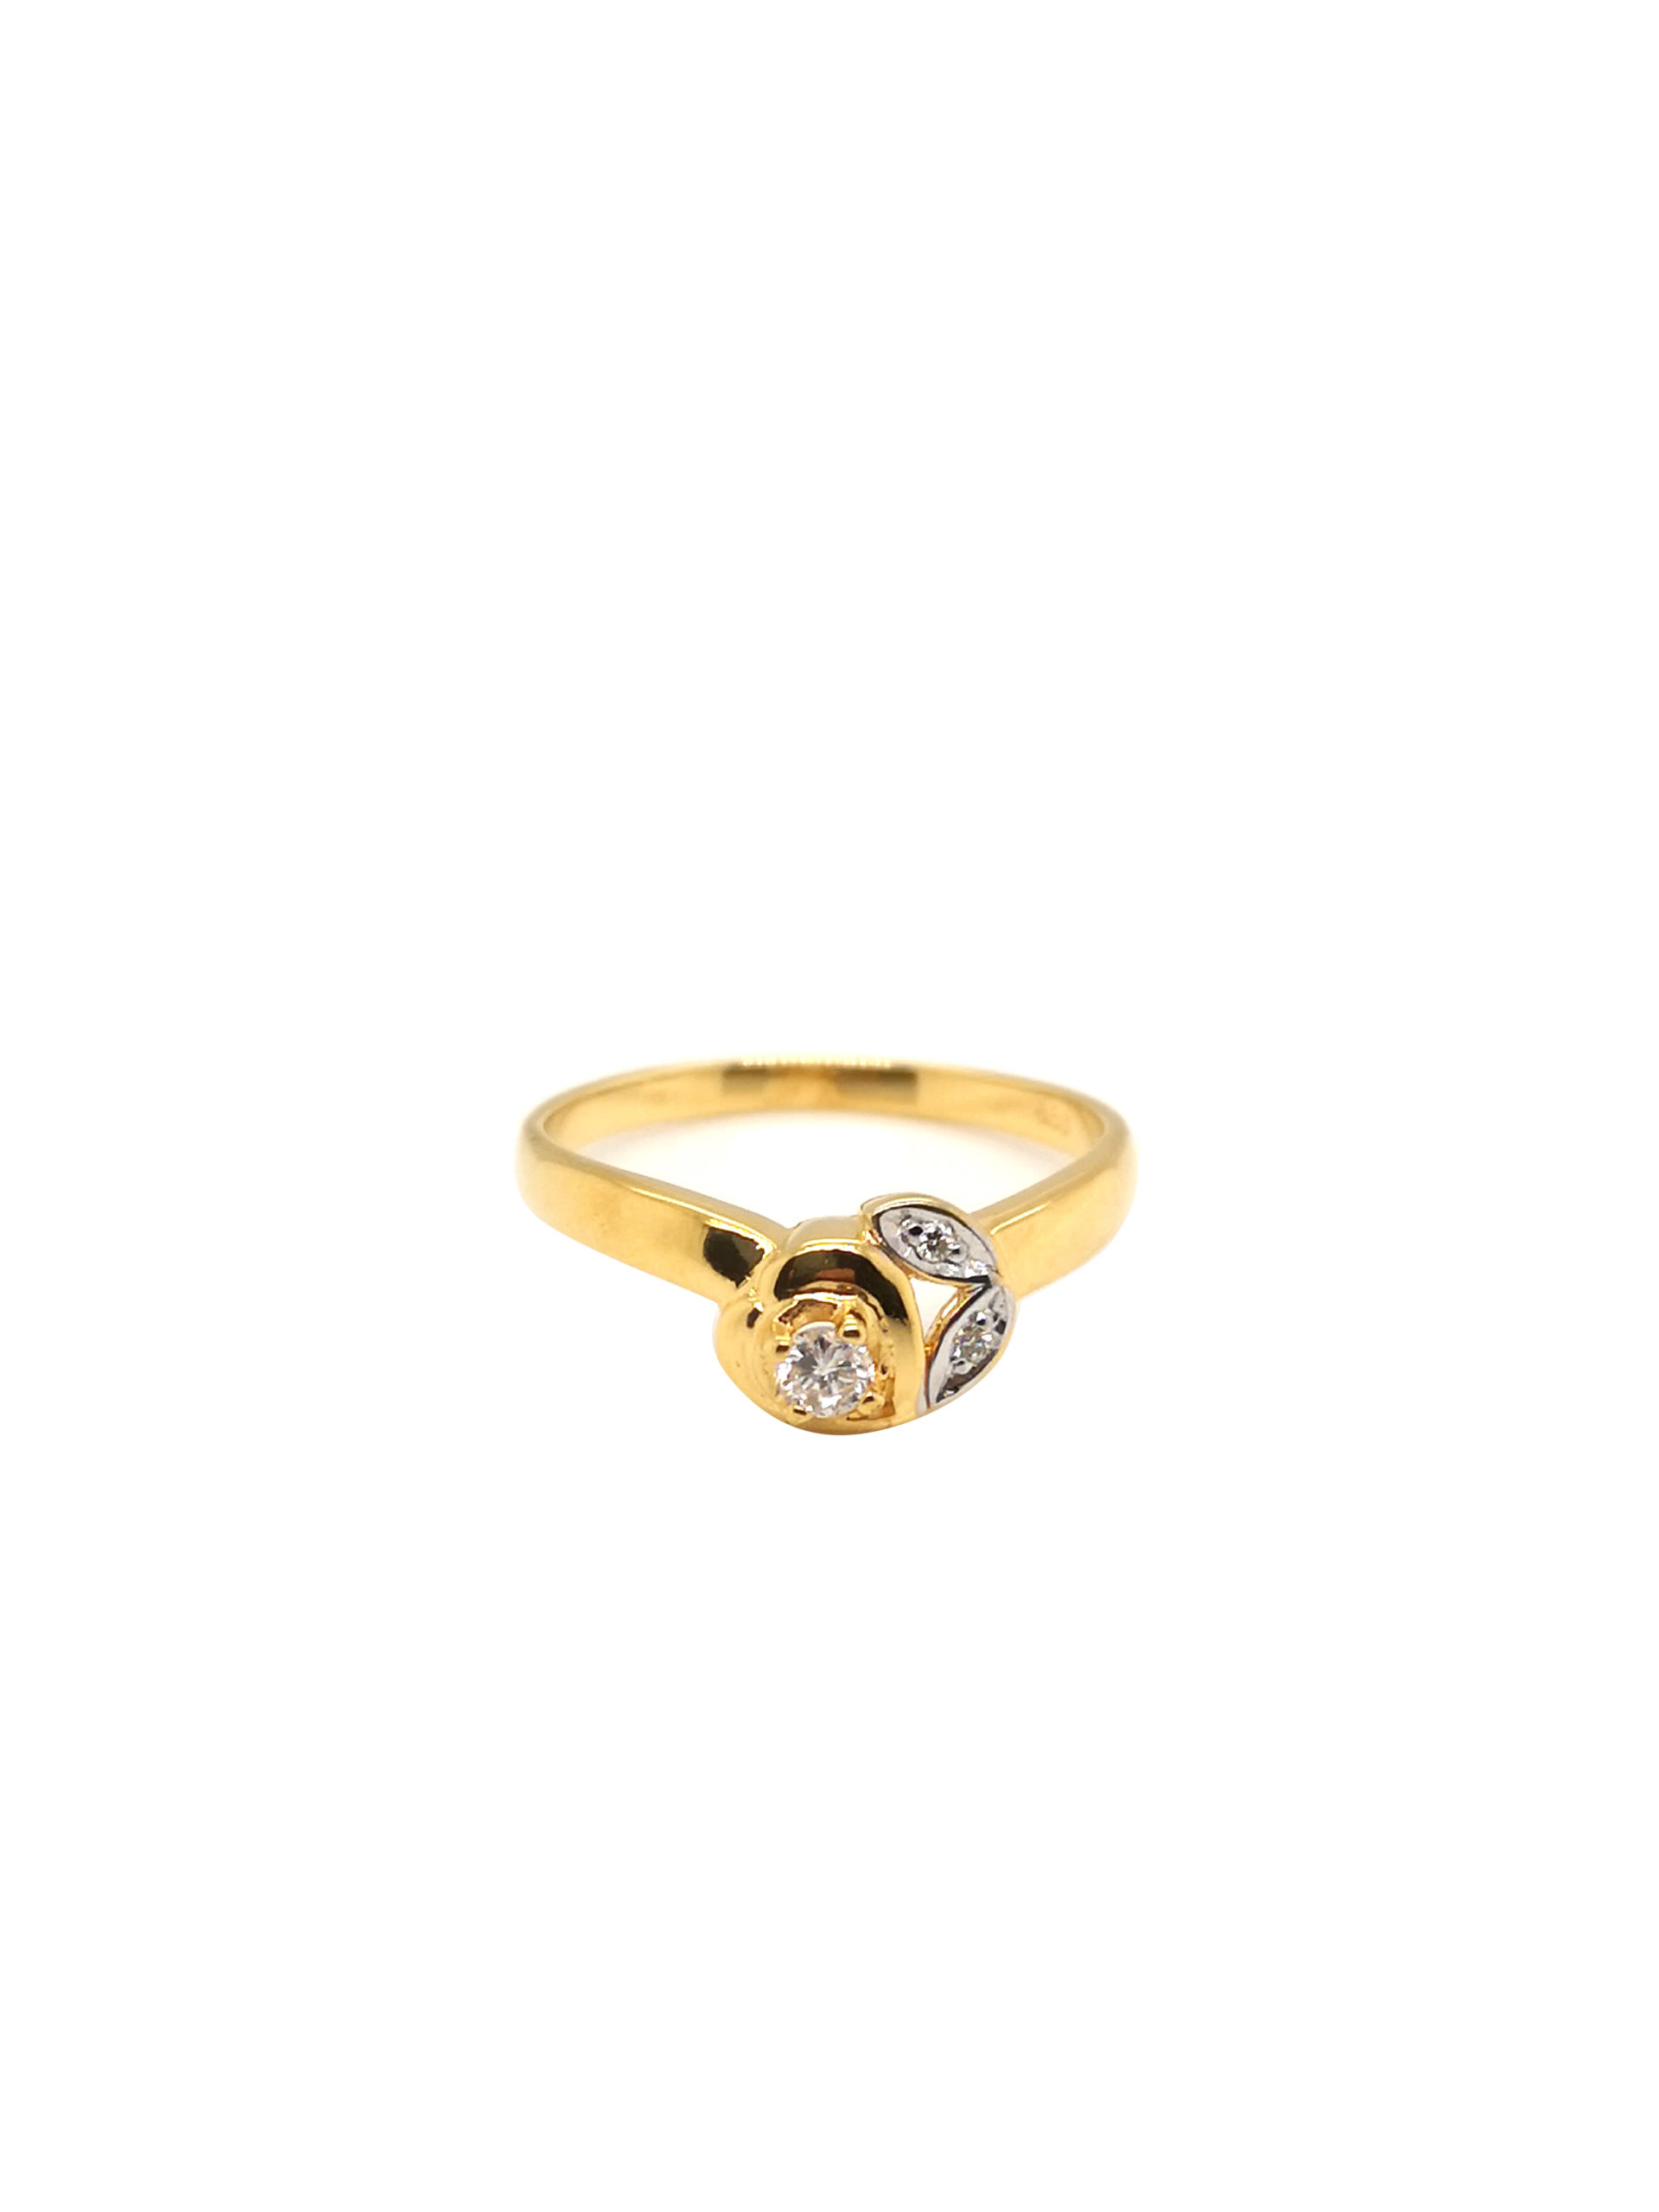 20K Yellow Gold Diamond Ring - ValueMax Jewellery